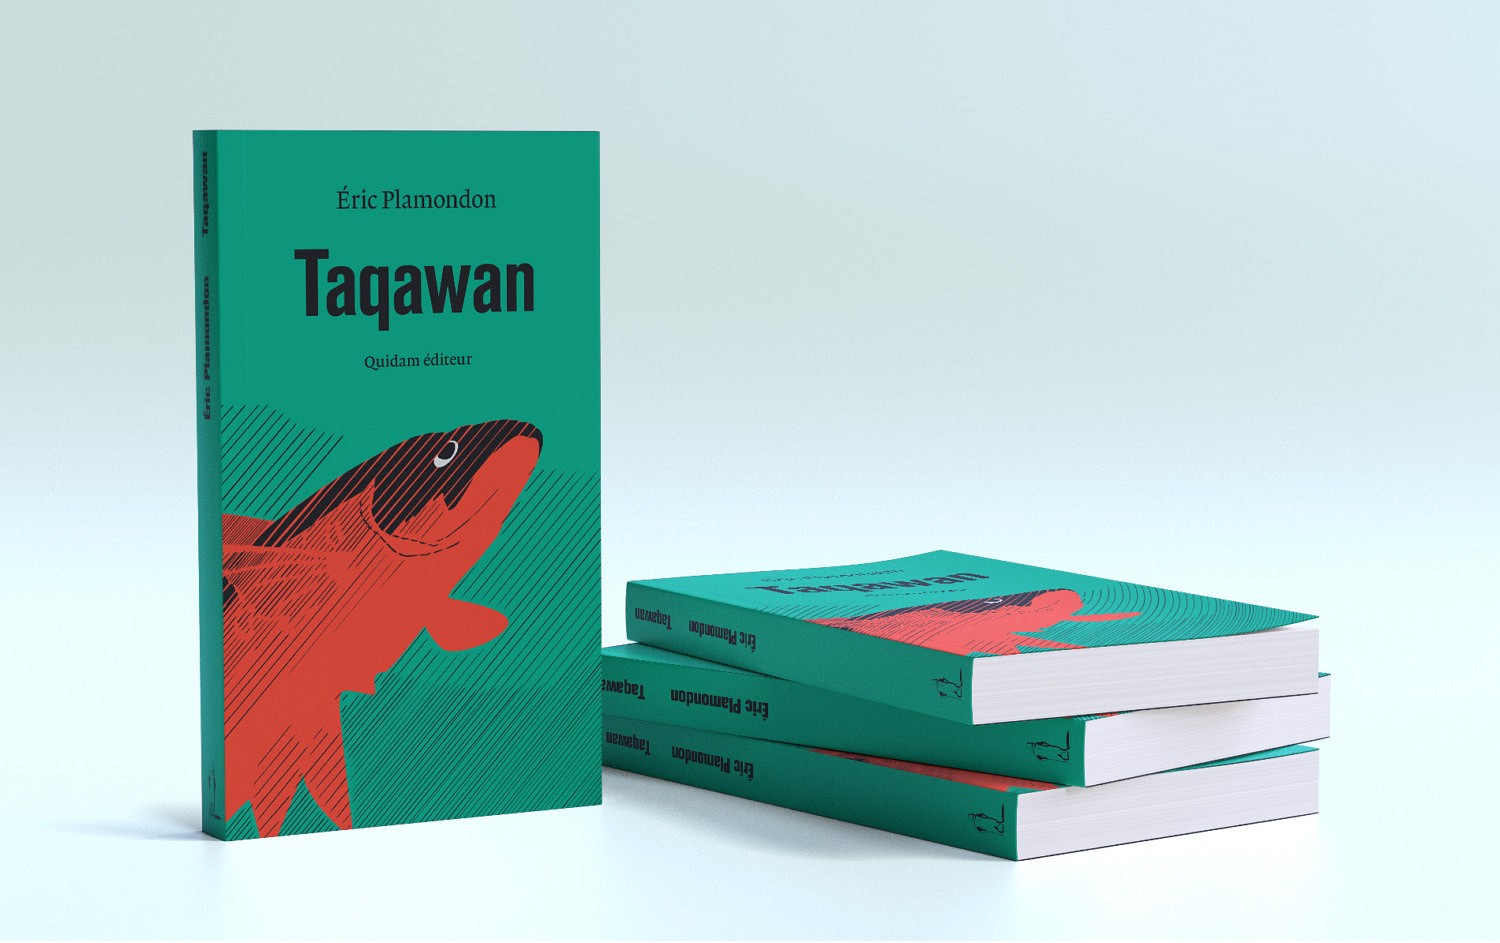 Taqawan - Éric Plamondon | Chinoiserie réalisée sous Illustrator